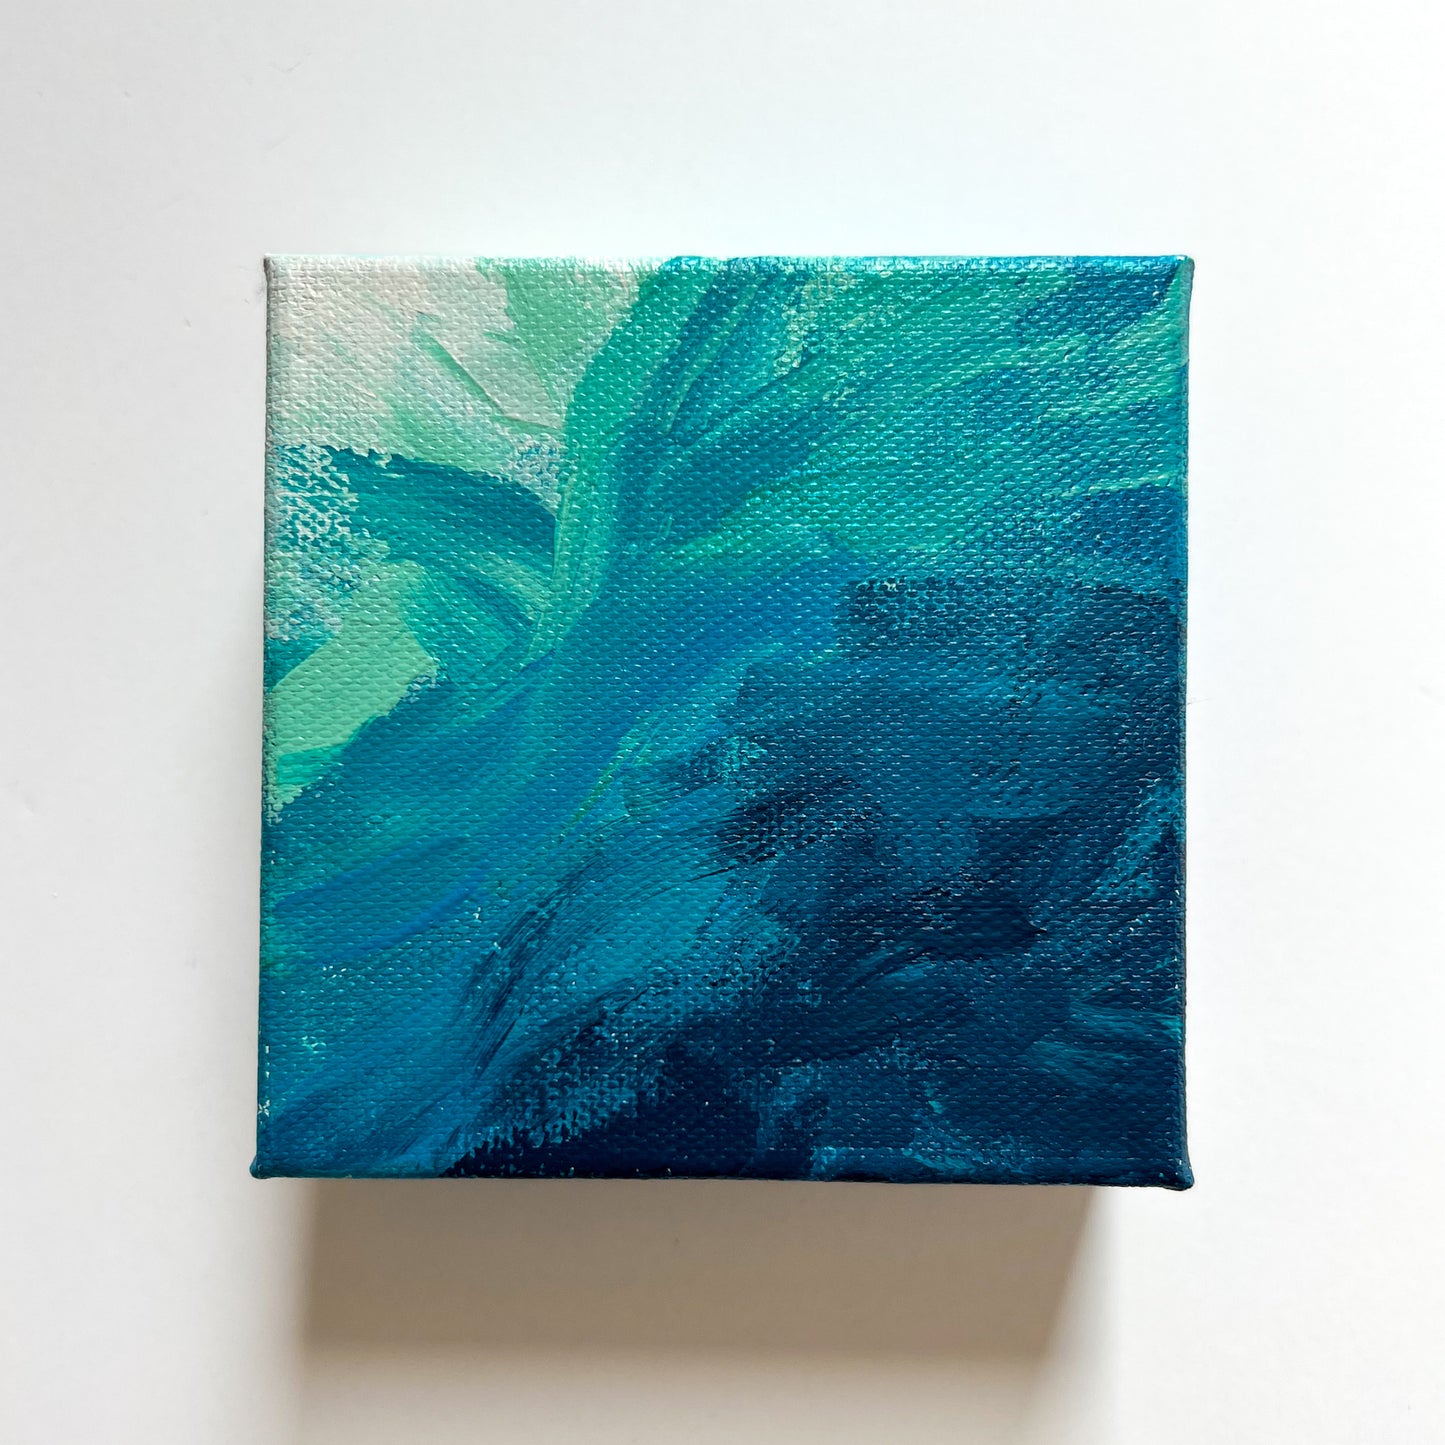 Little Square Ocean - Canvas Painting